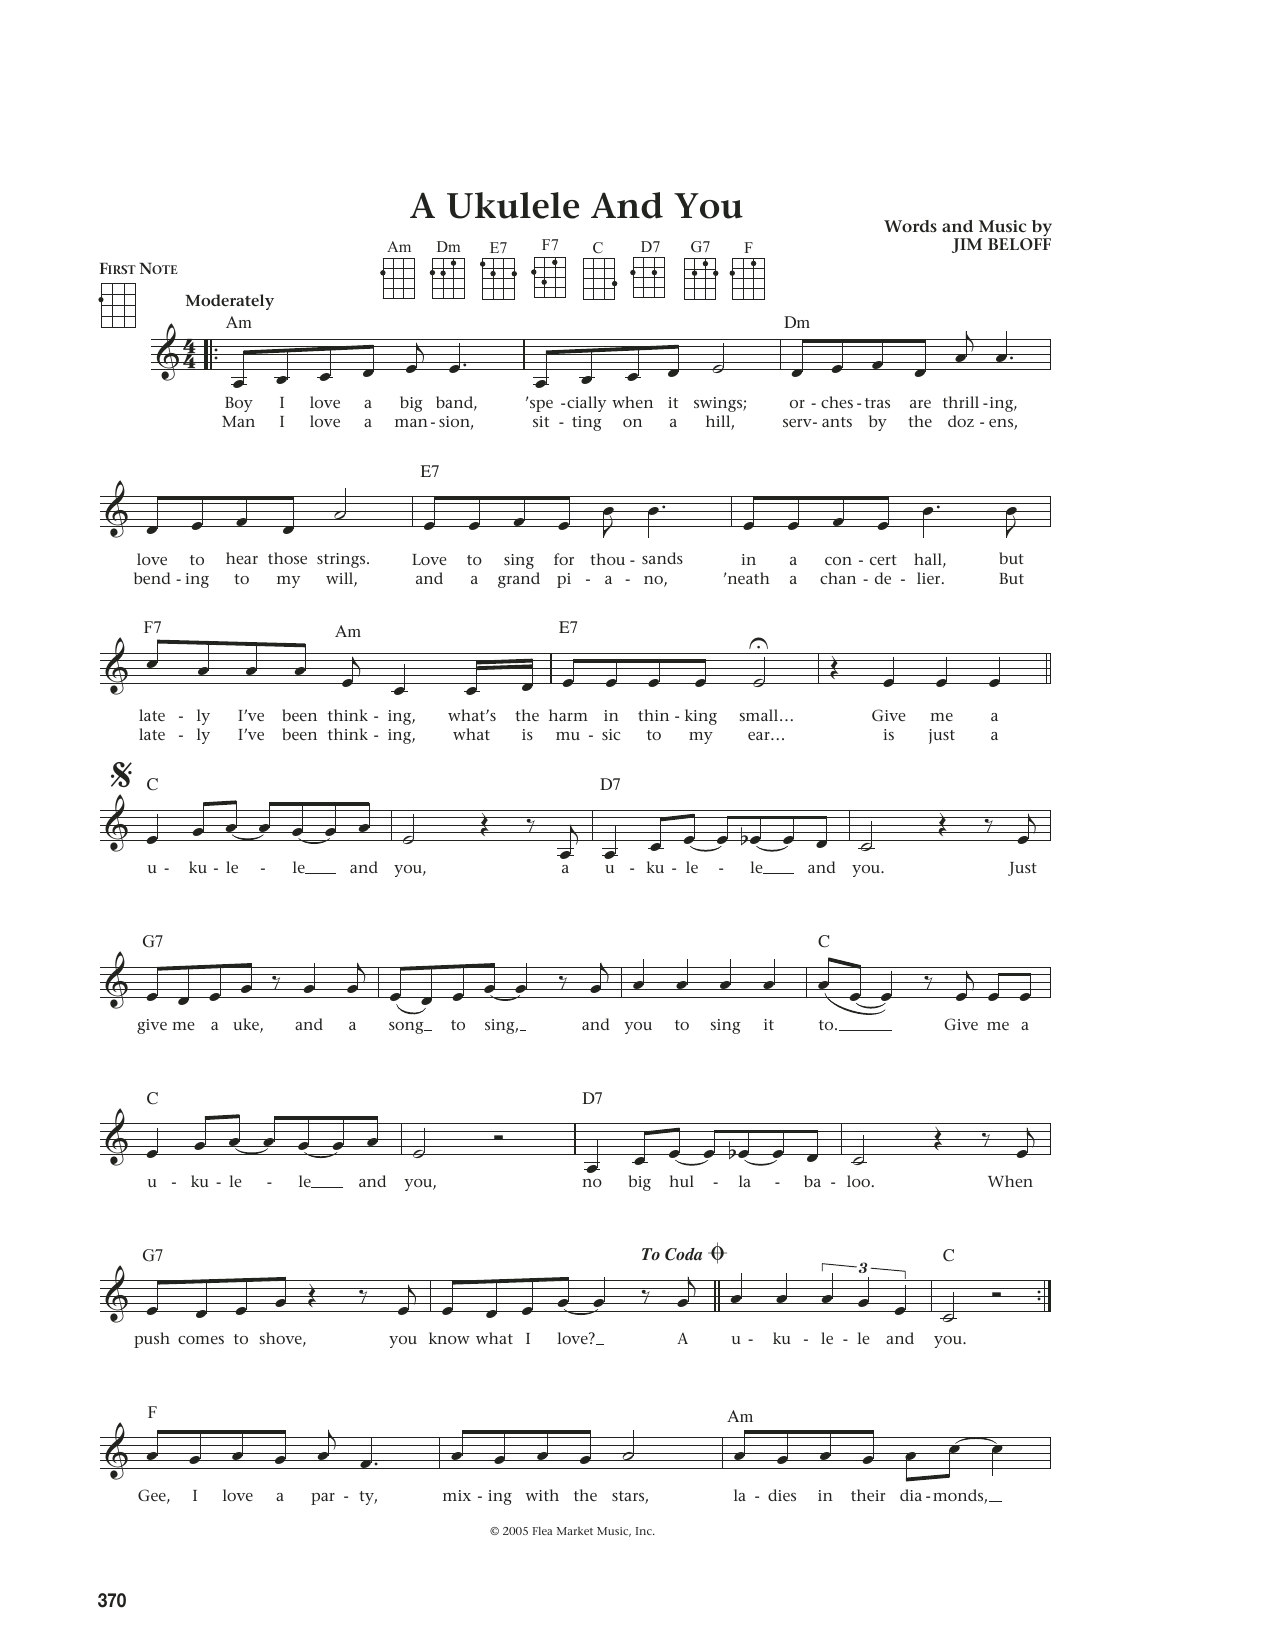 Jim Beloff A Ukulele And You (from The Daily Ukulele) (arr. Liz and Jim Beloff) Sheet Music Notes & Chords for Ukulele - Download or Print PDF